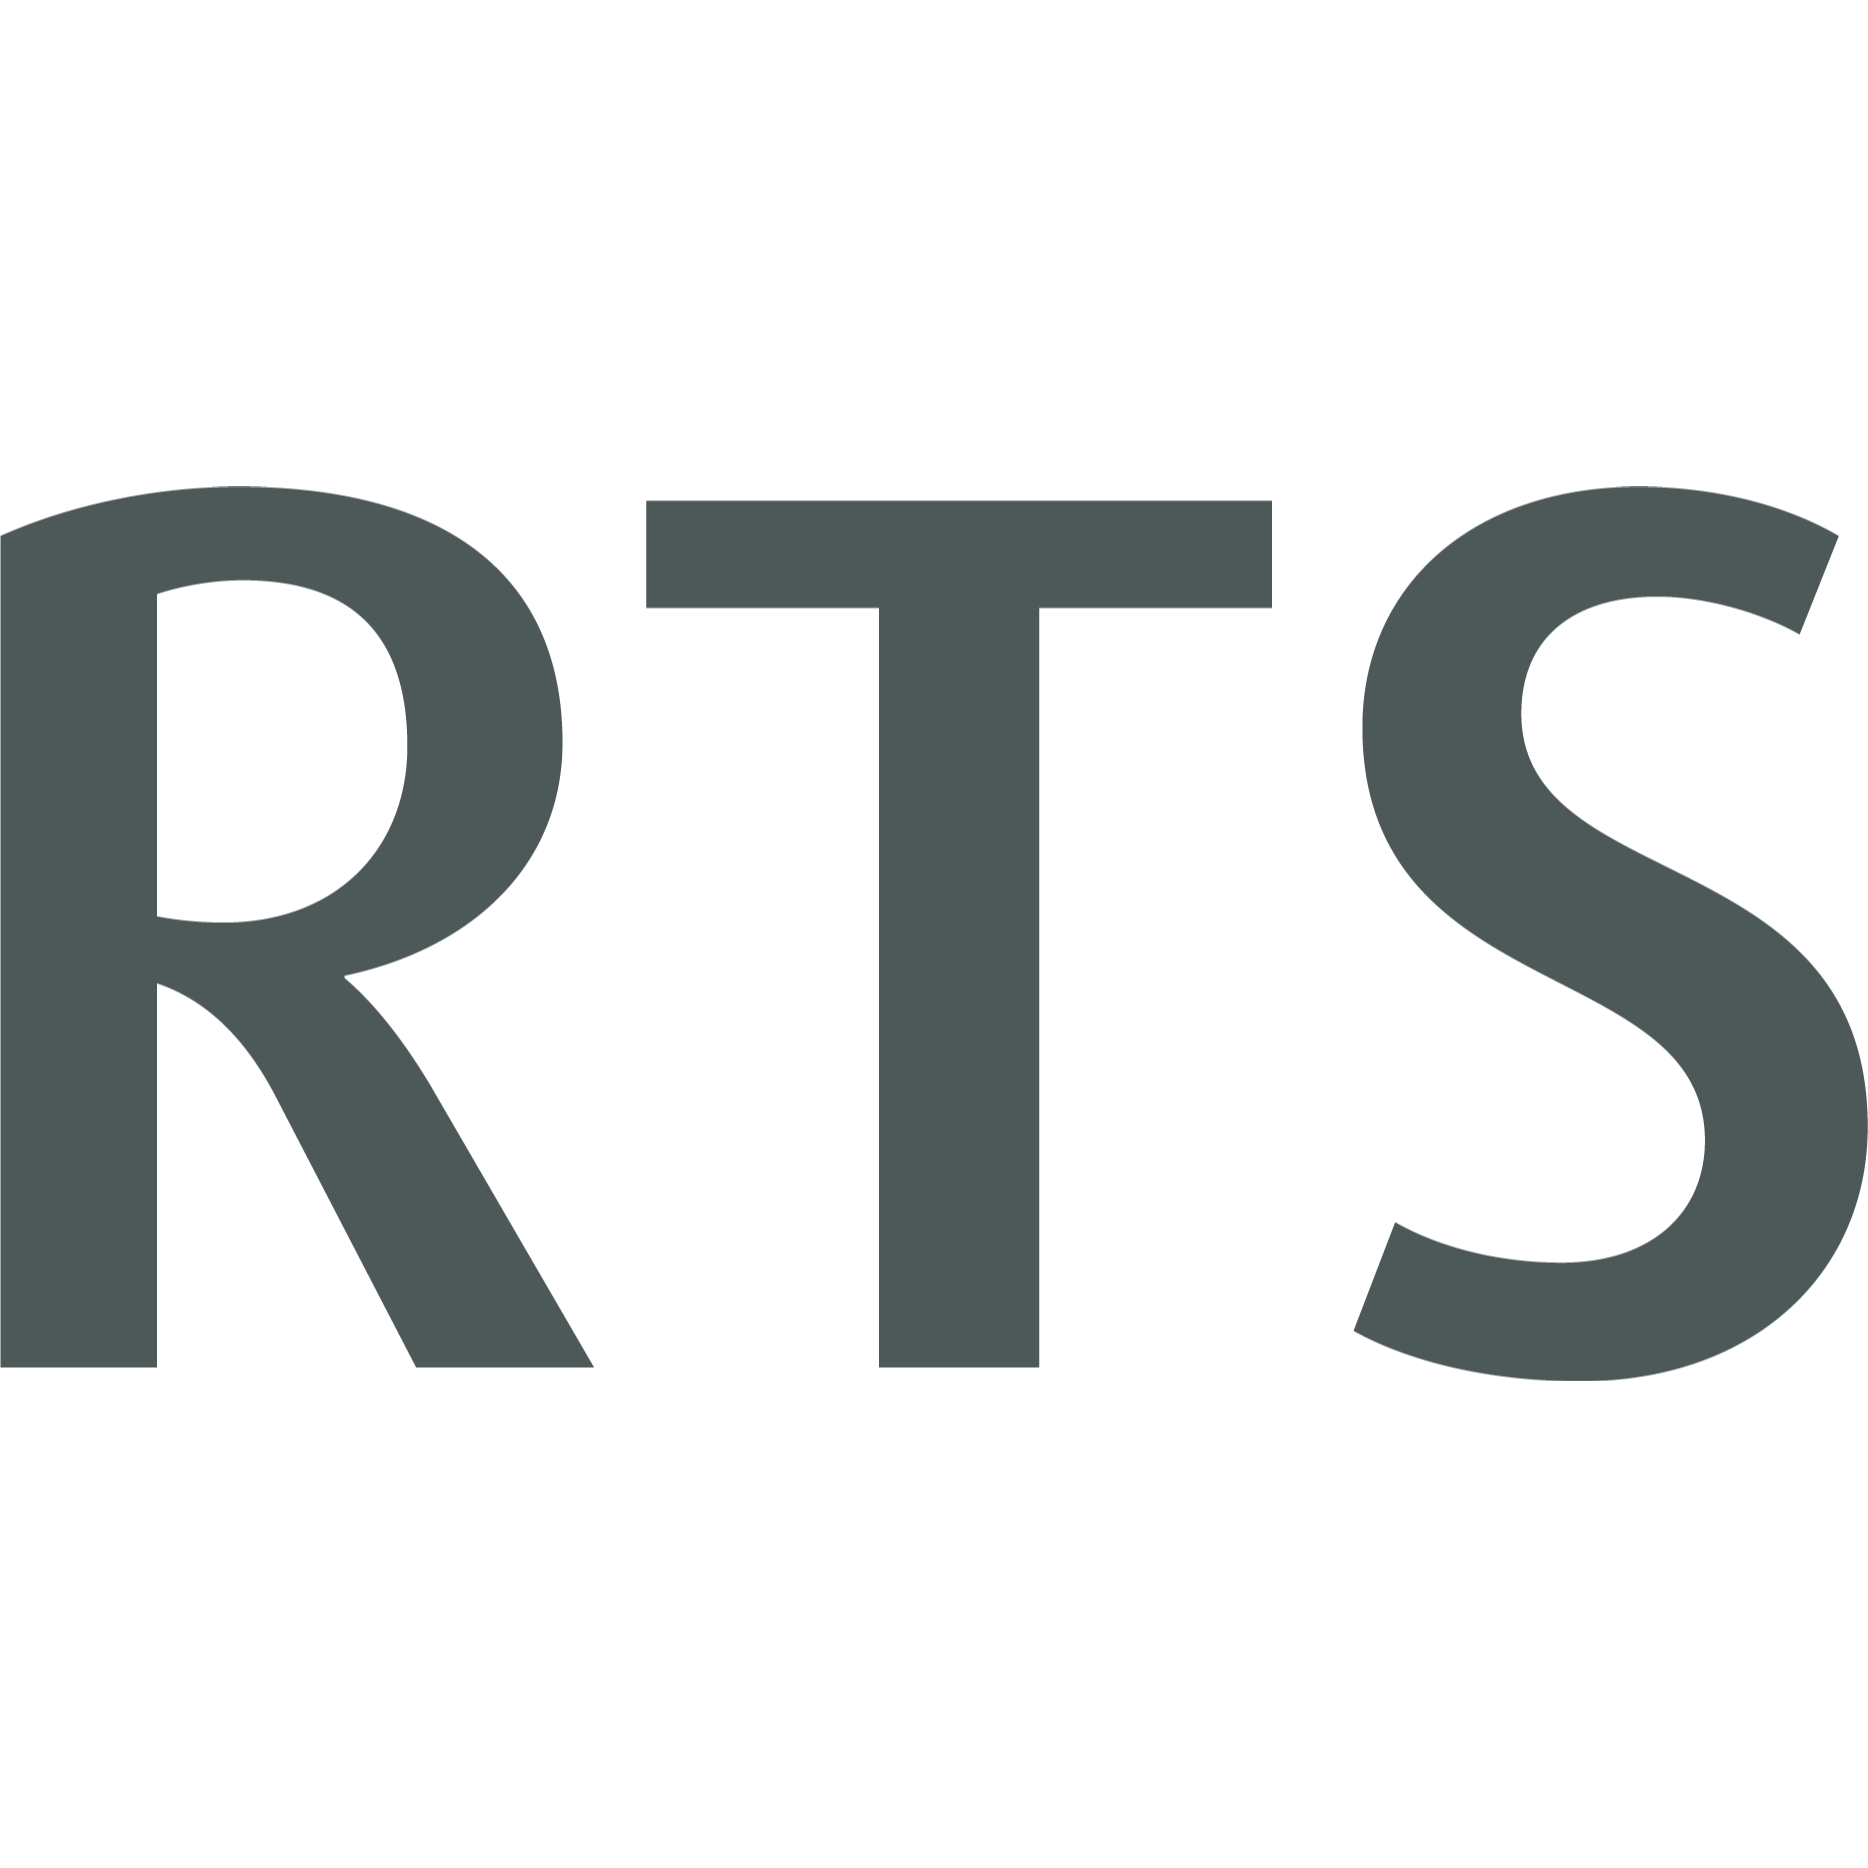 RTS Steuerberatungsgesellschaft GmbH & Co. KG, Bad Friedrichshall in Bad Friedrichshall - Logo